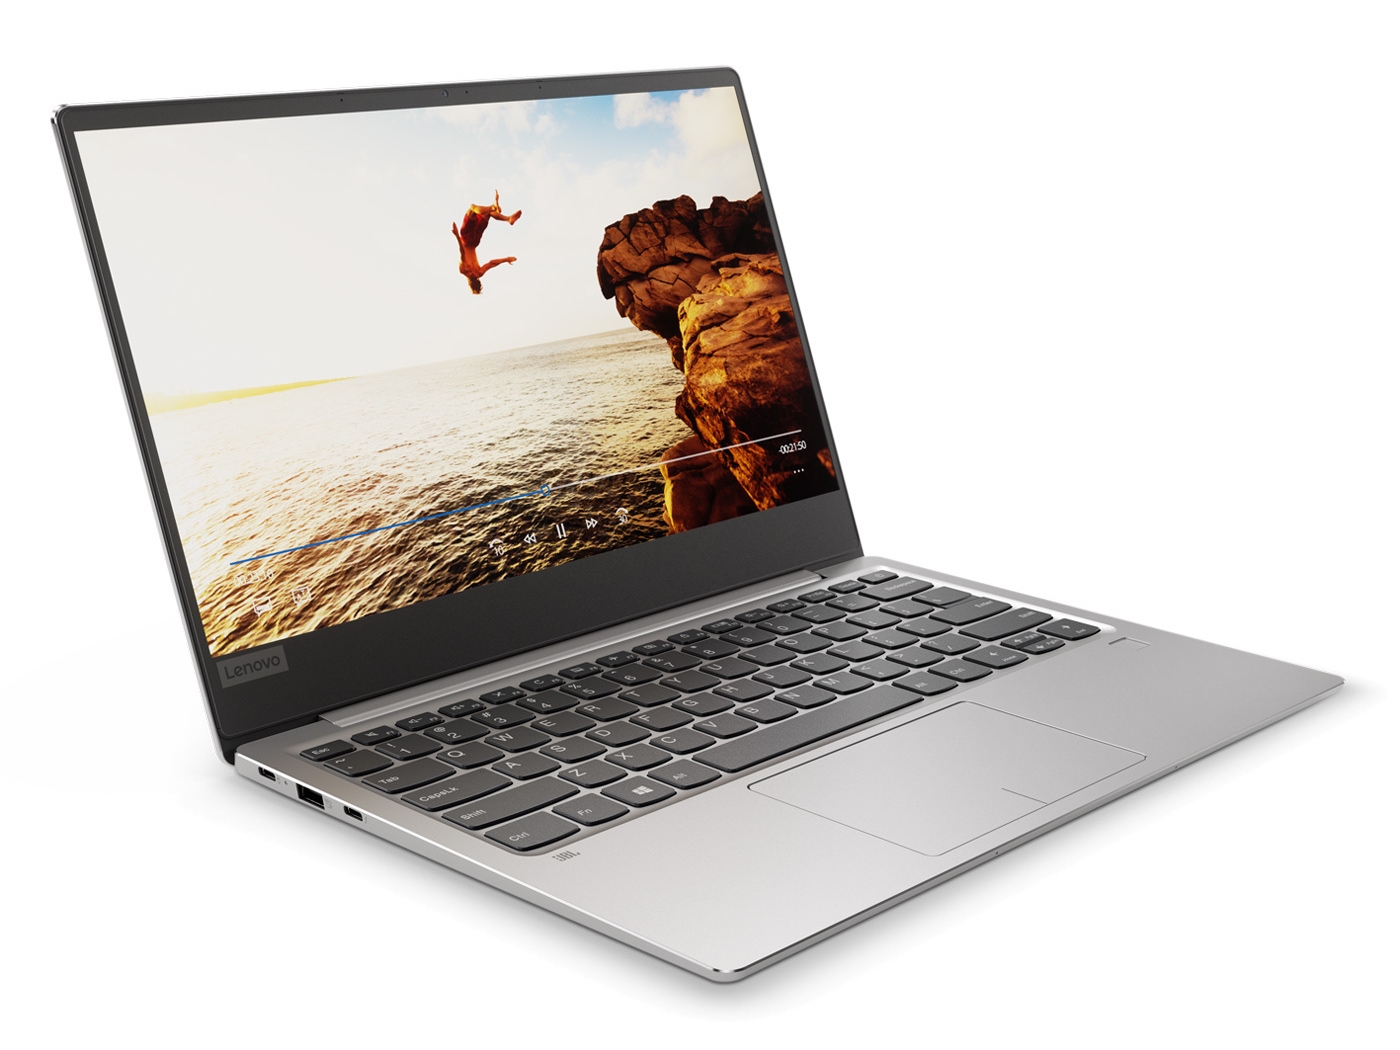 Lenovo Ideapad 720S (Ryzen 2500U, Vega 8) Laptop Review   Reviews